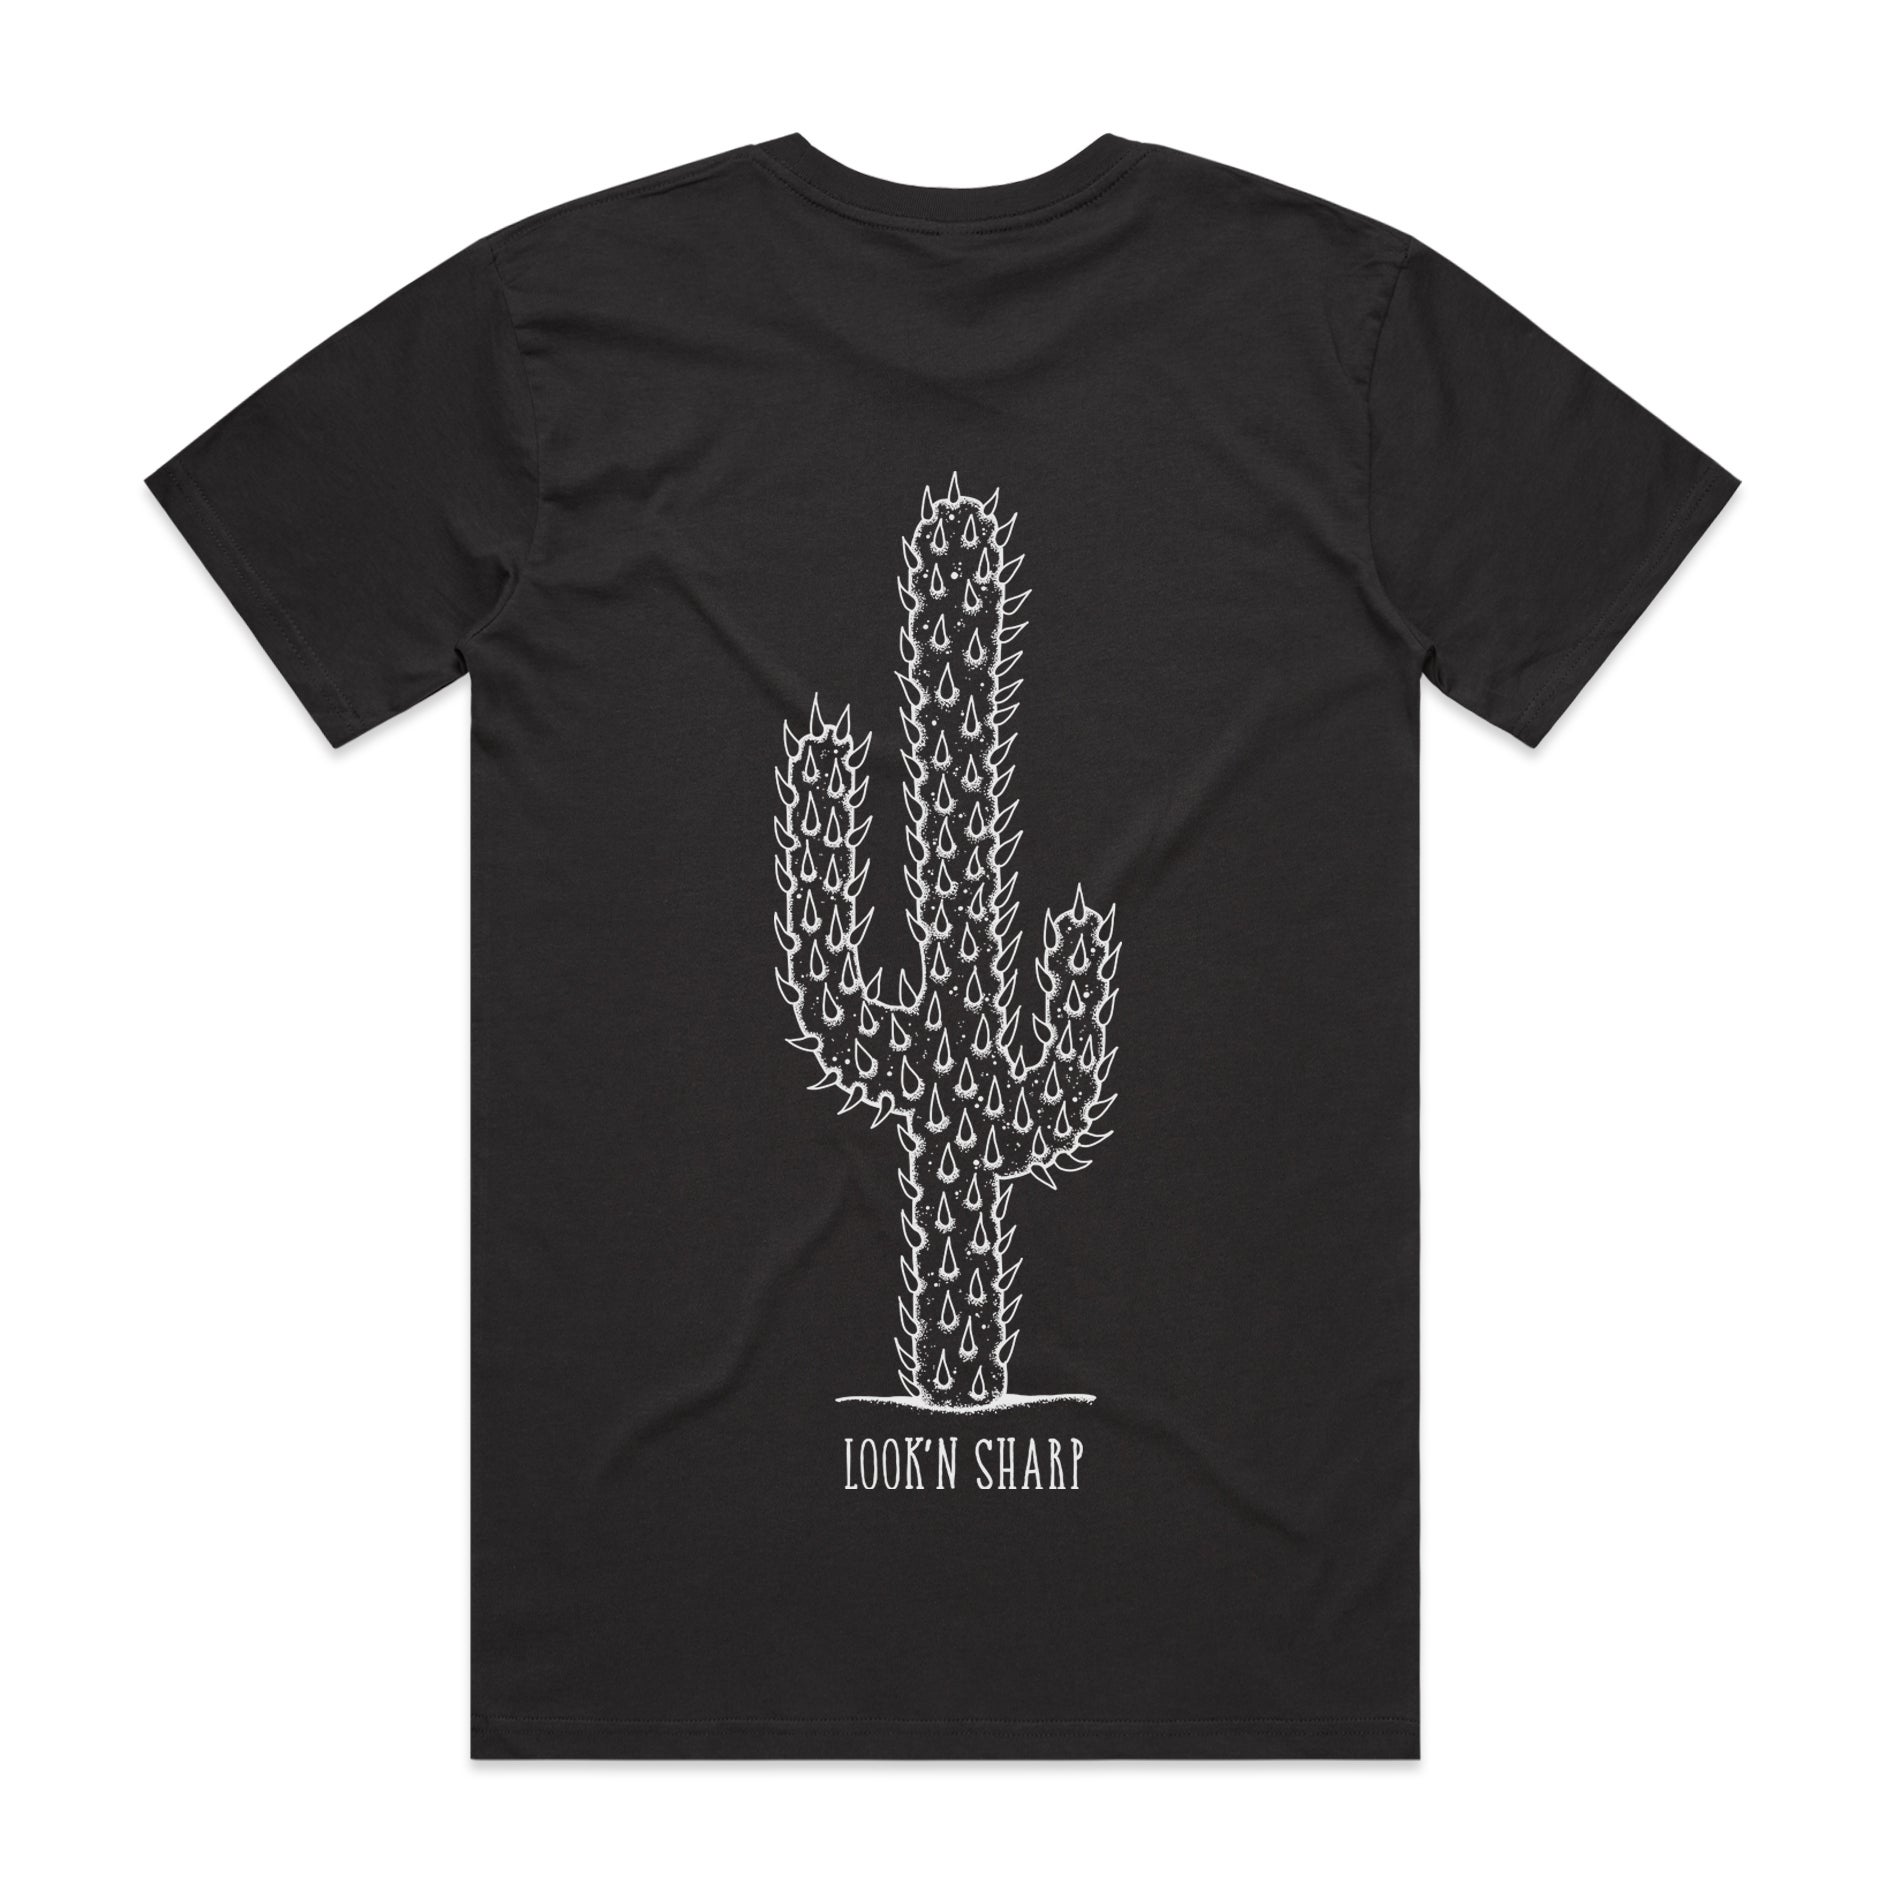 Looking Sharp Cactus Shirt T-Shirt